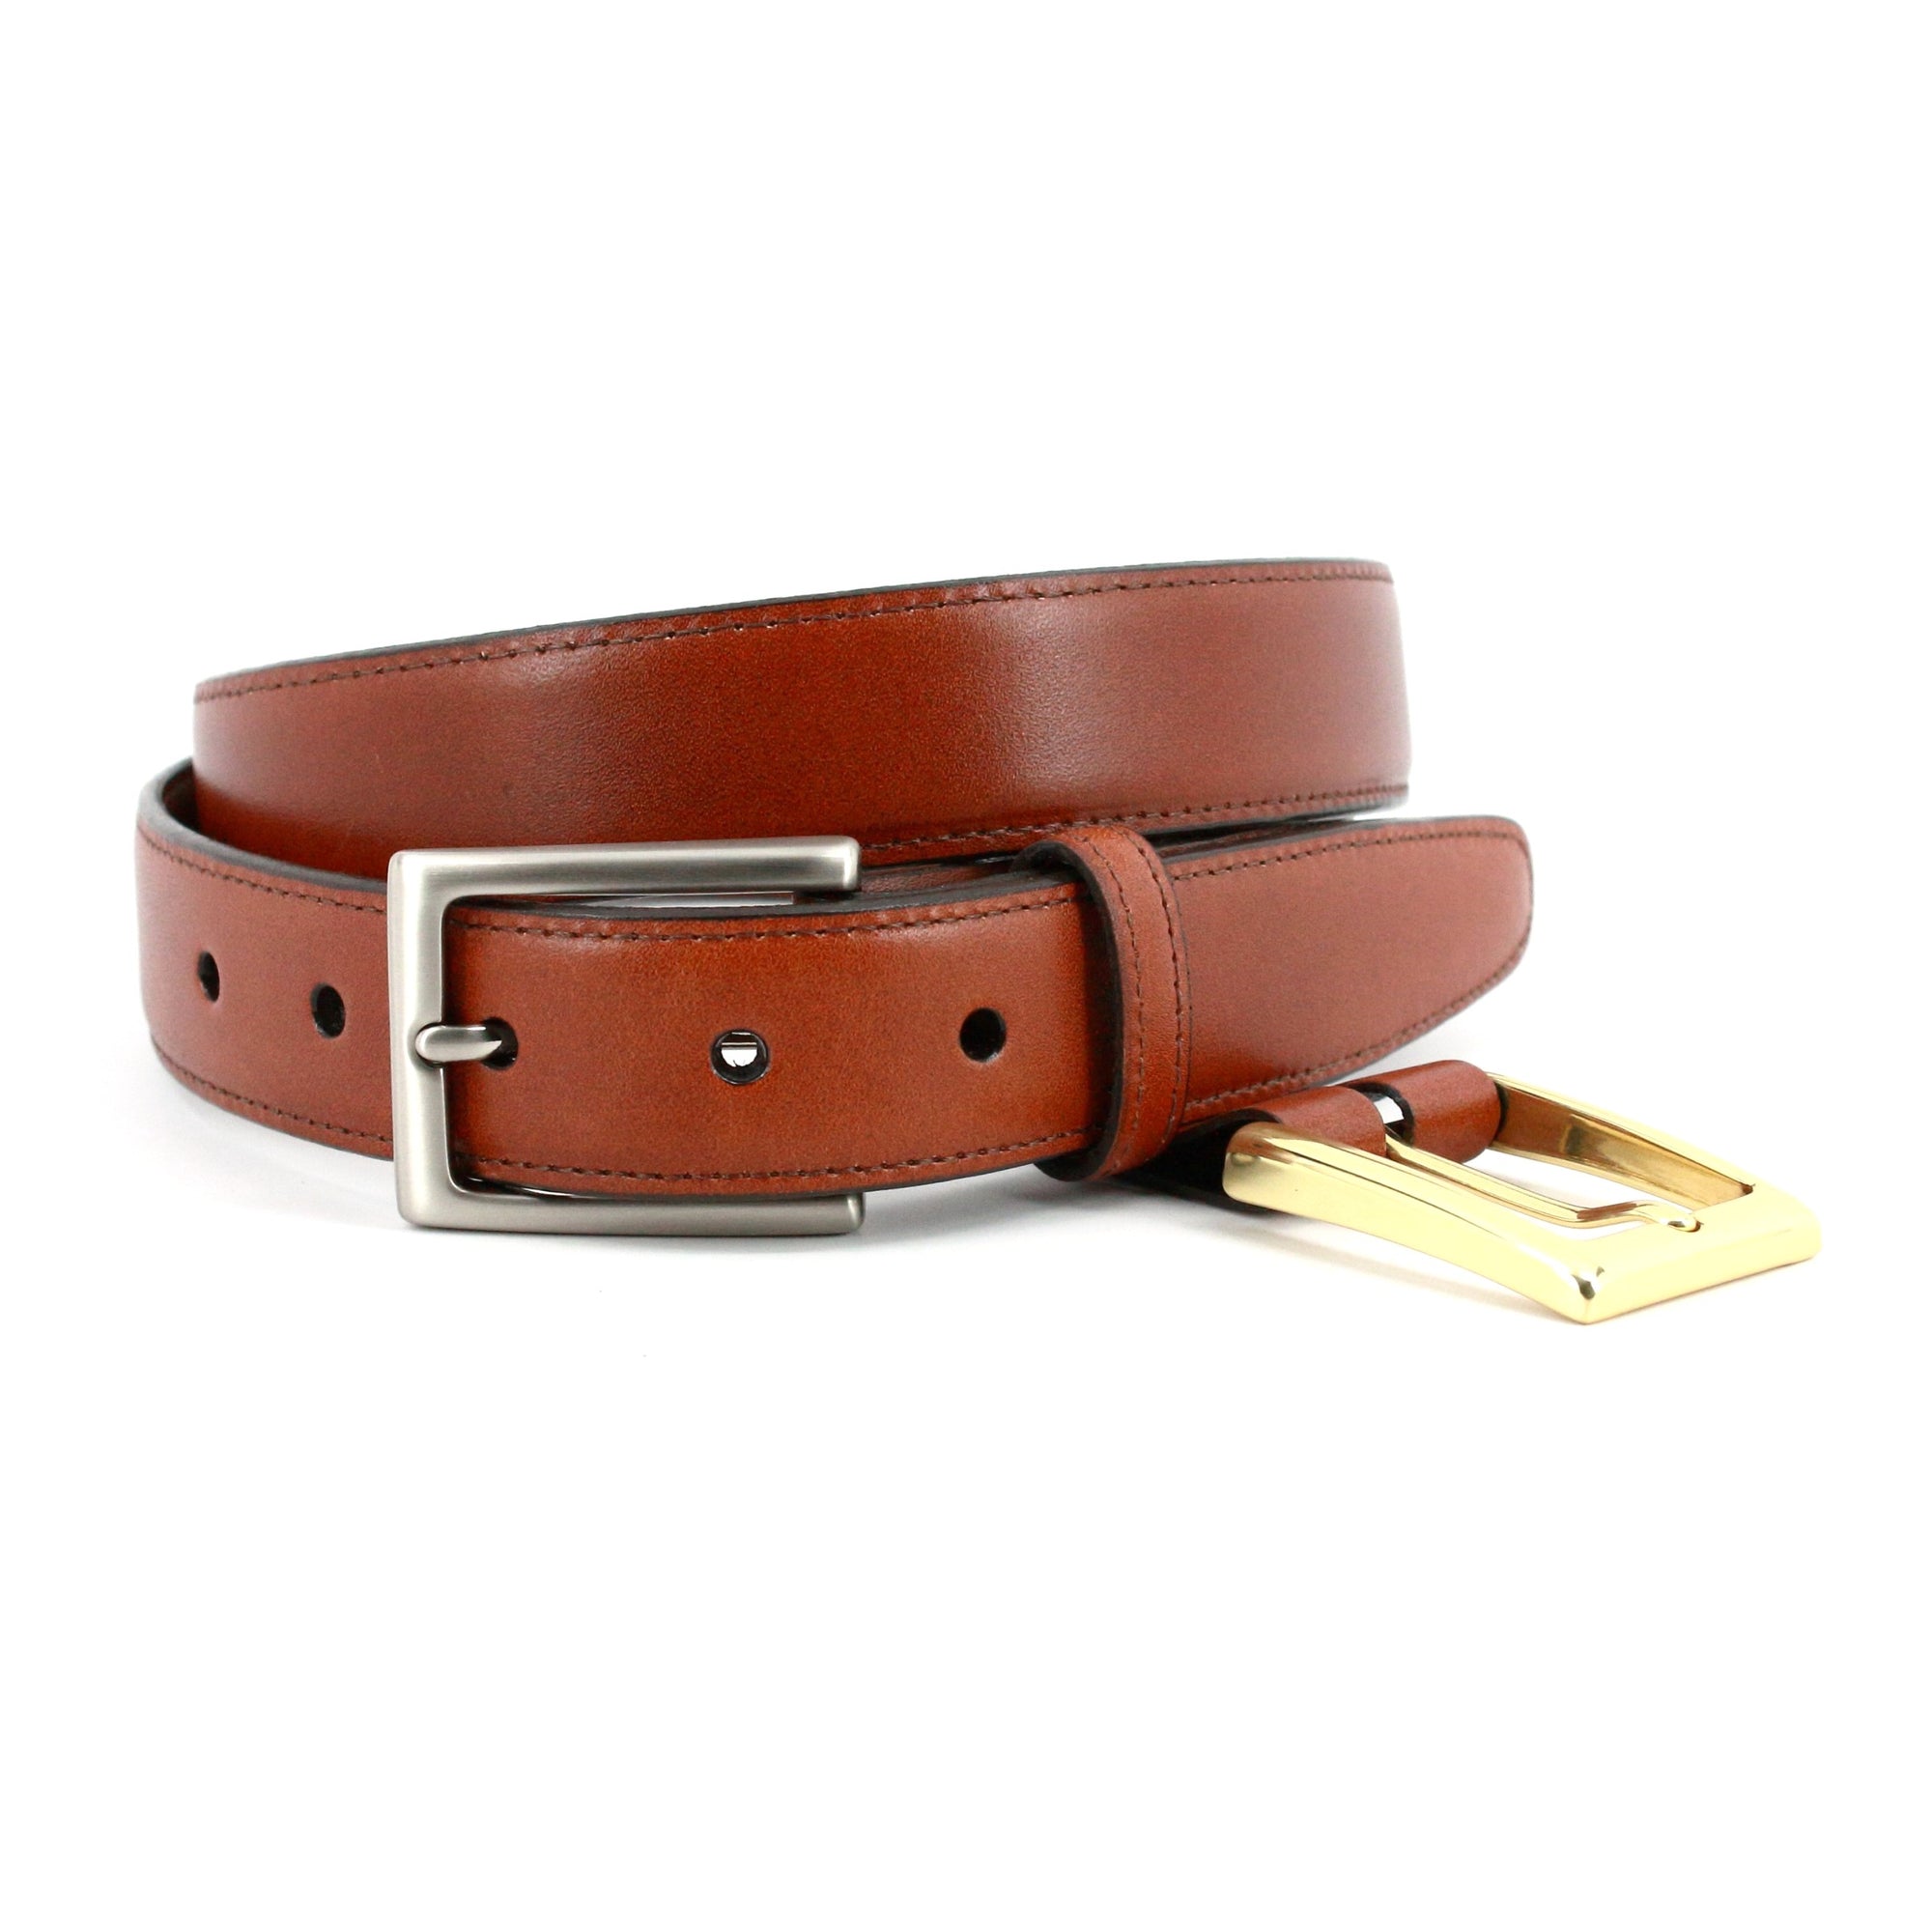 Glazed Kipskin Belt with Interchangeable Buckles in Honey by Torino Leather